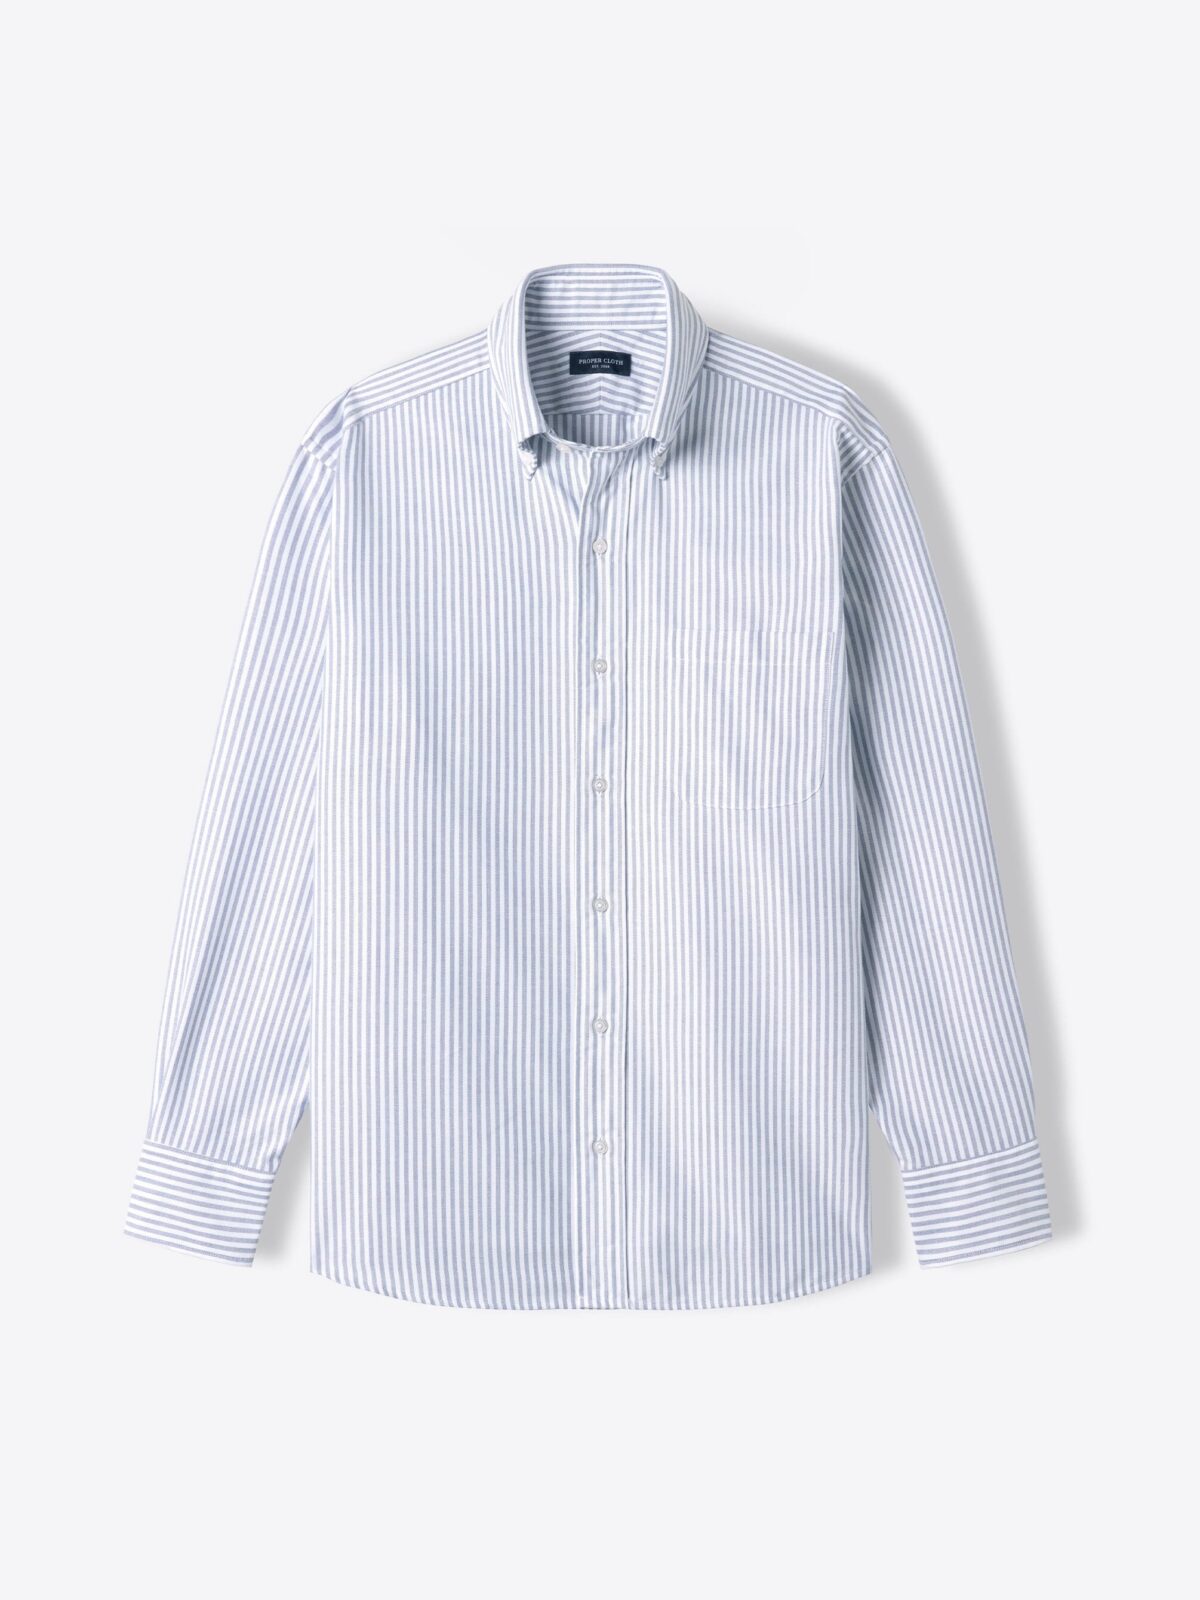 American Pima Navy University Stripe Oxford Cloth Shirt by Proper Cloth